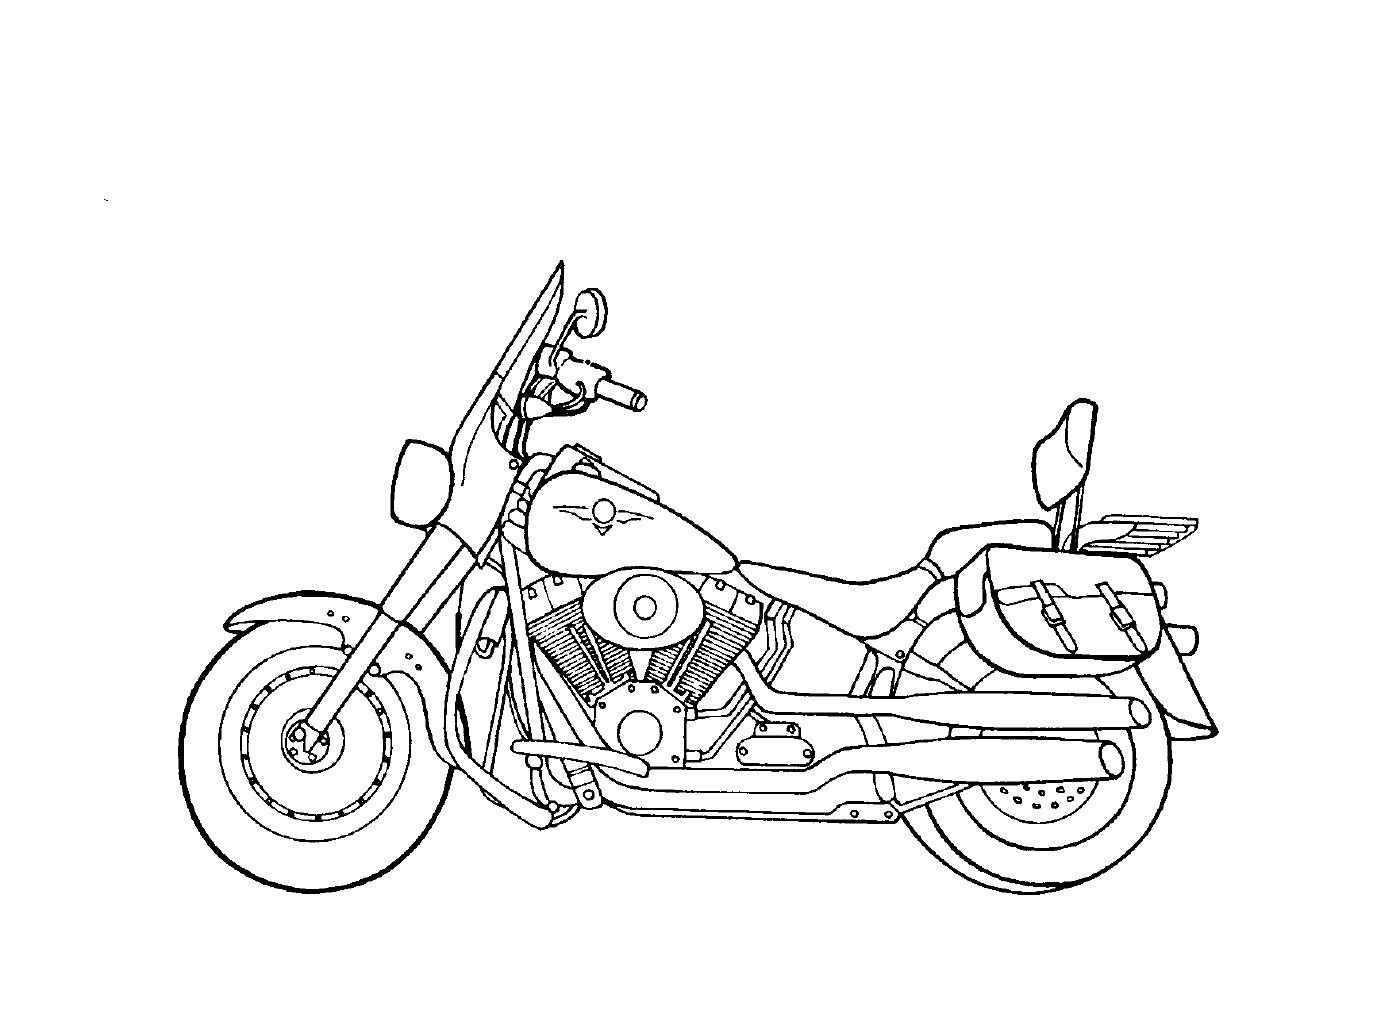  Motorcycle number 11 